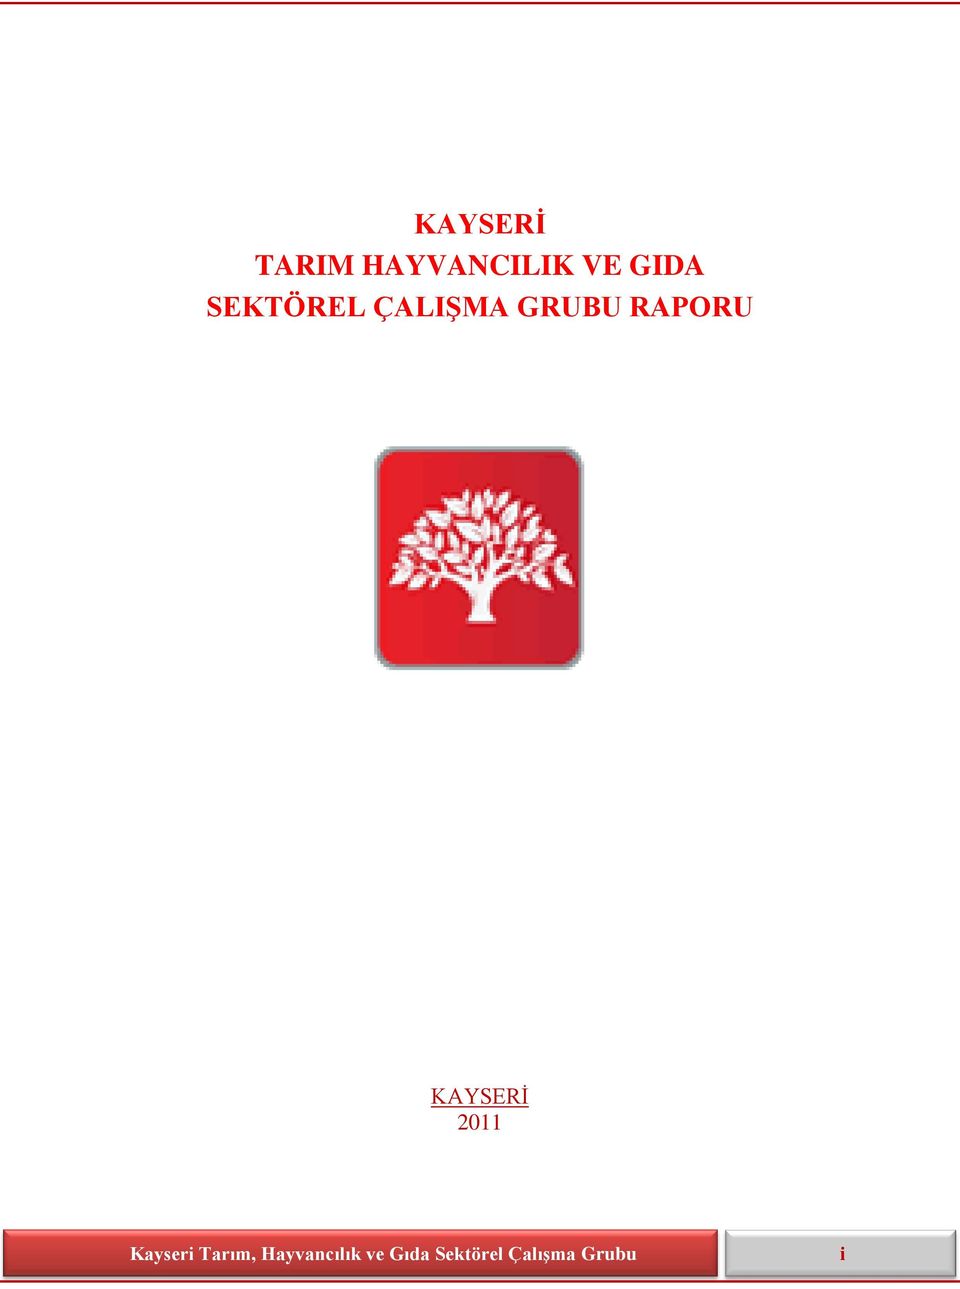 KAYSERĠ 2011 Kayseri Tarım,